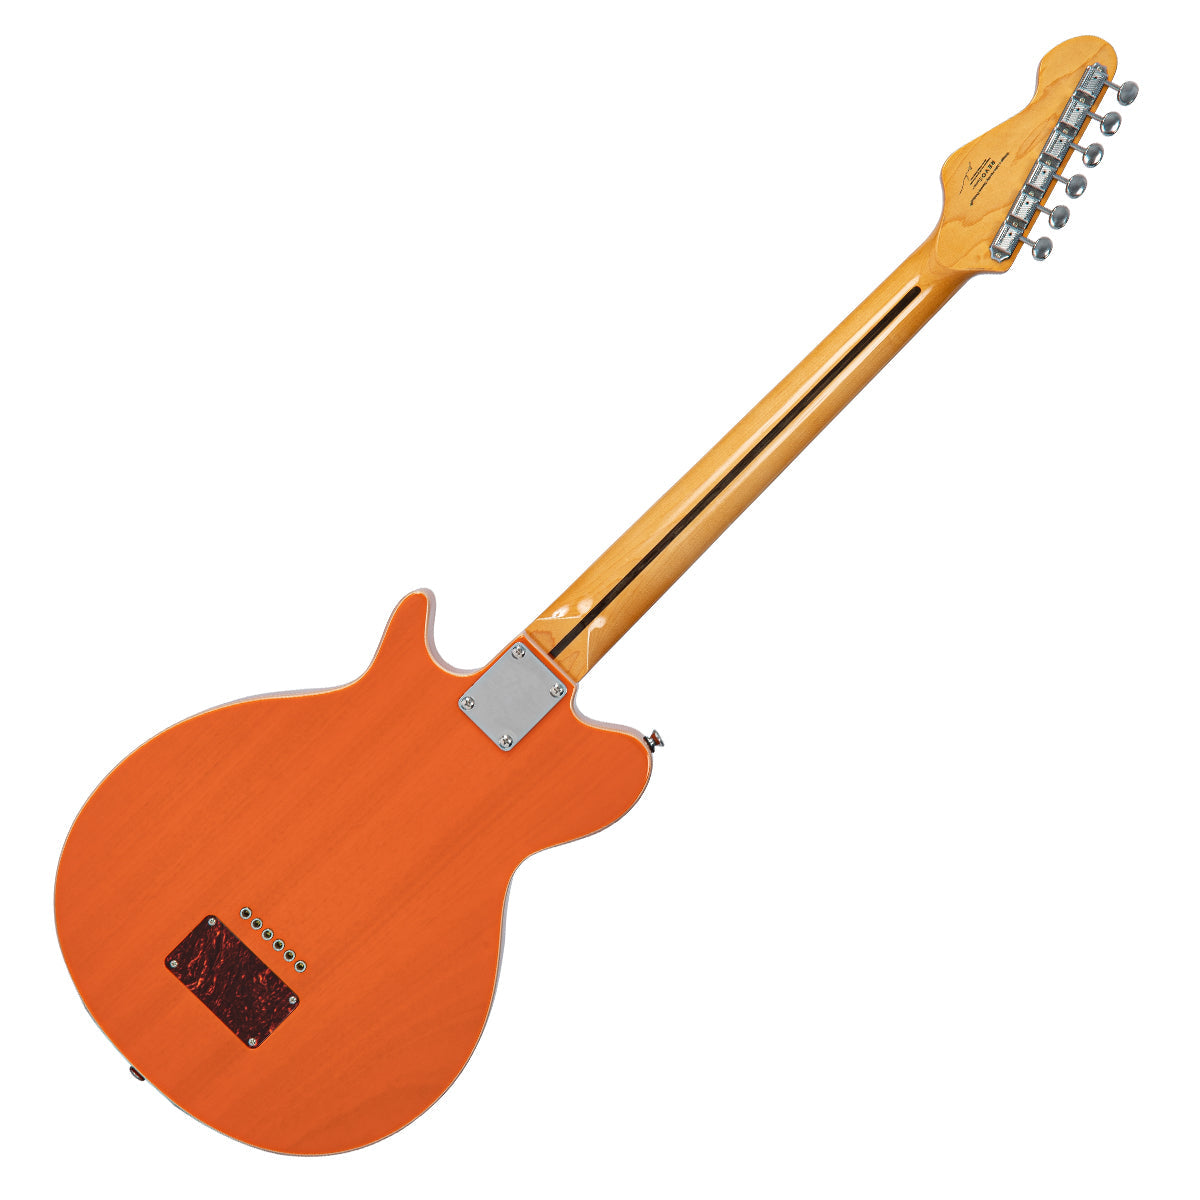 Vintage REVO Series 'Vision' Electric Guitar ~ Trans Orange, Electric Guitars for sale at Richards Guitars.